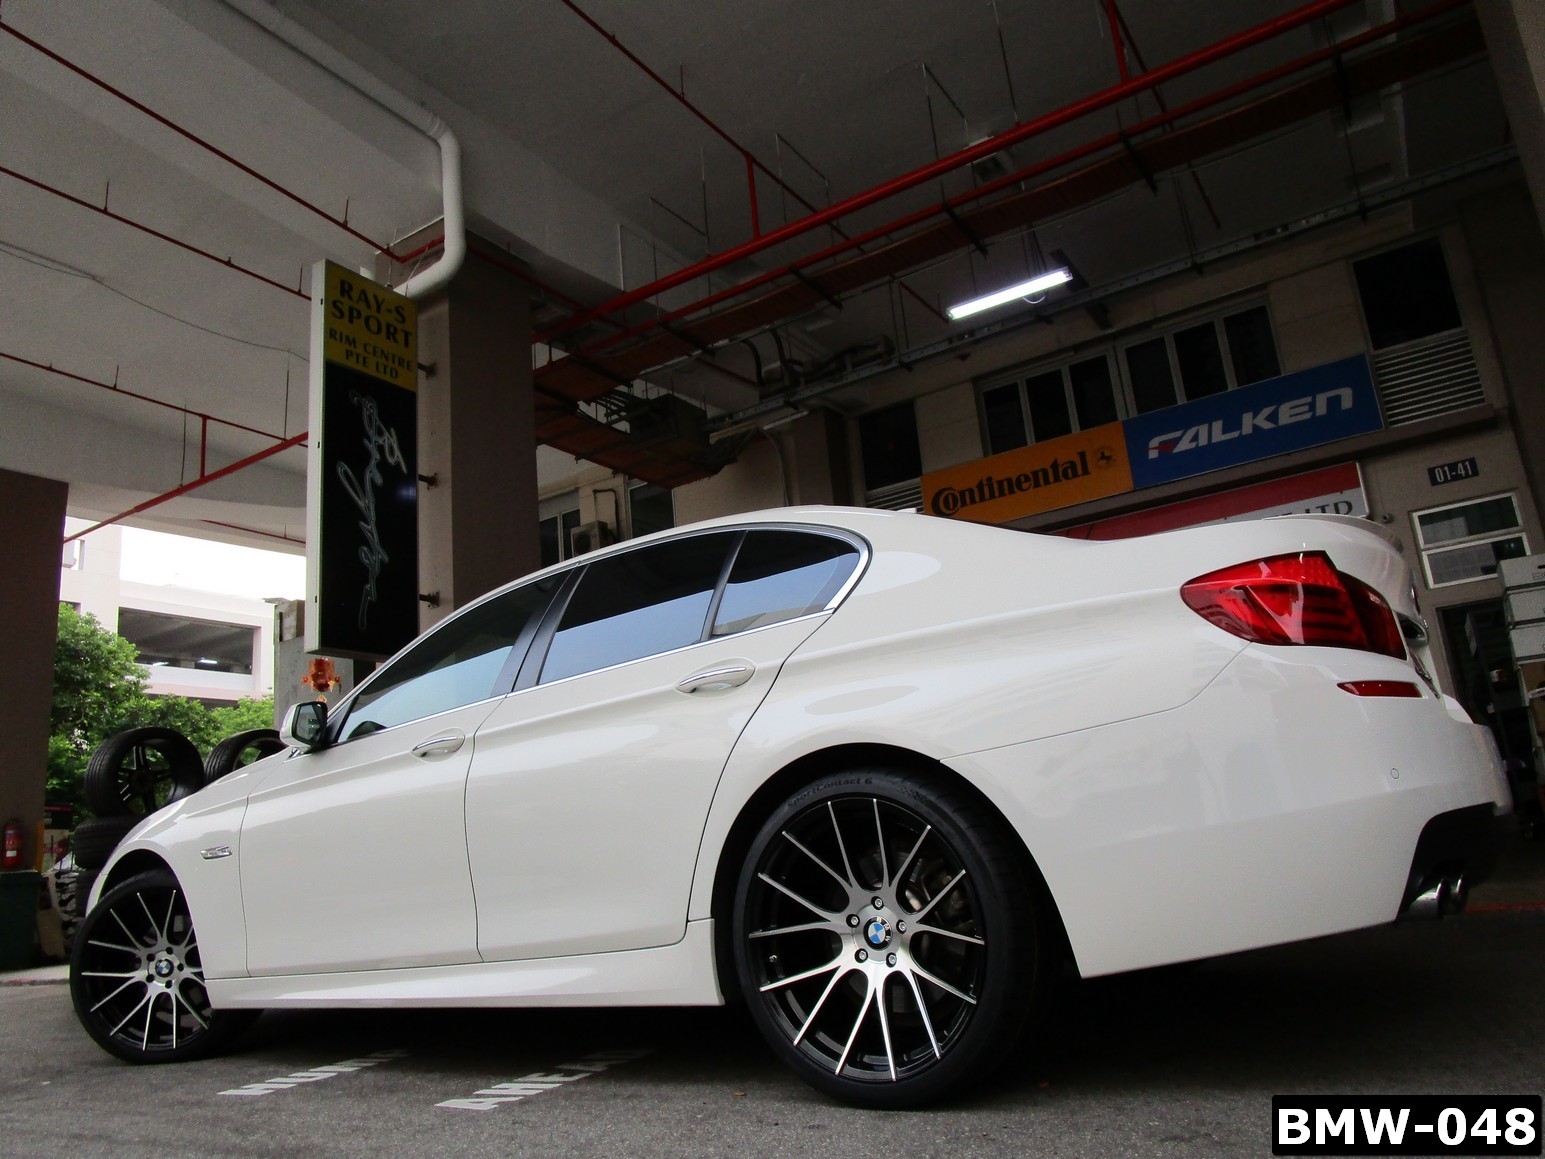 BMW-048.jpg